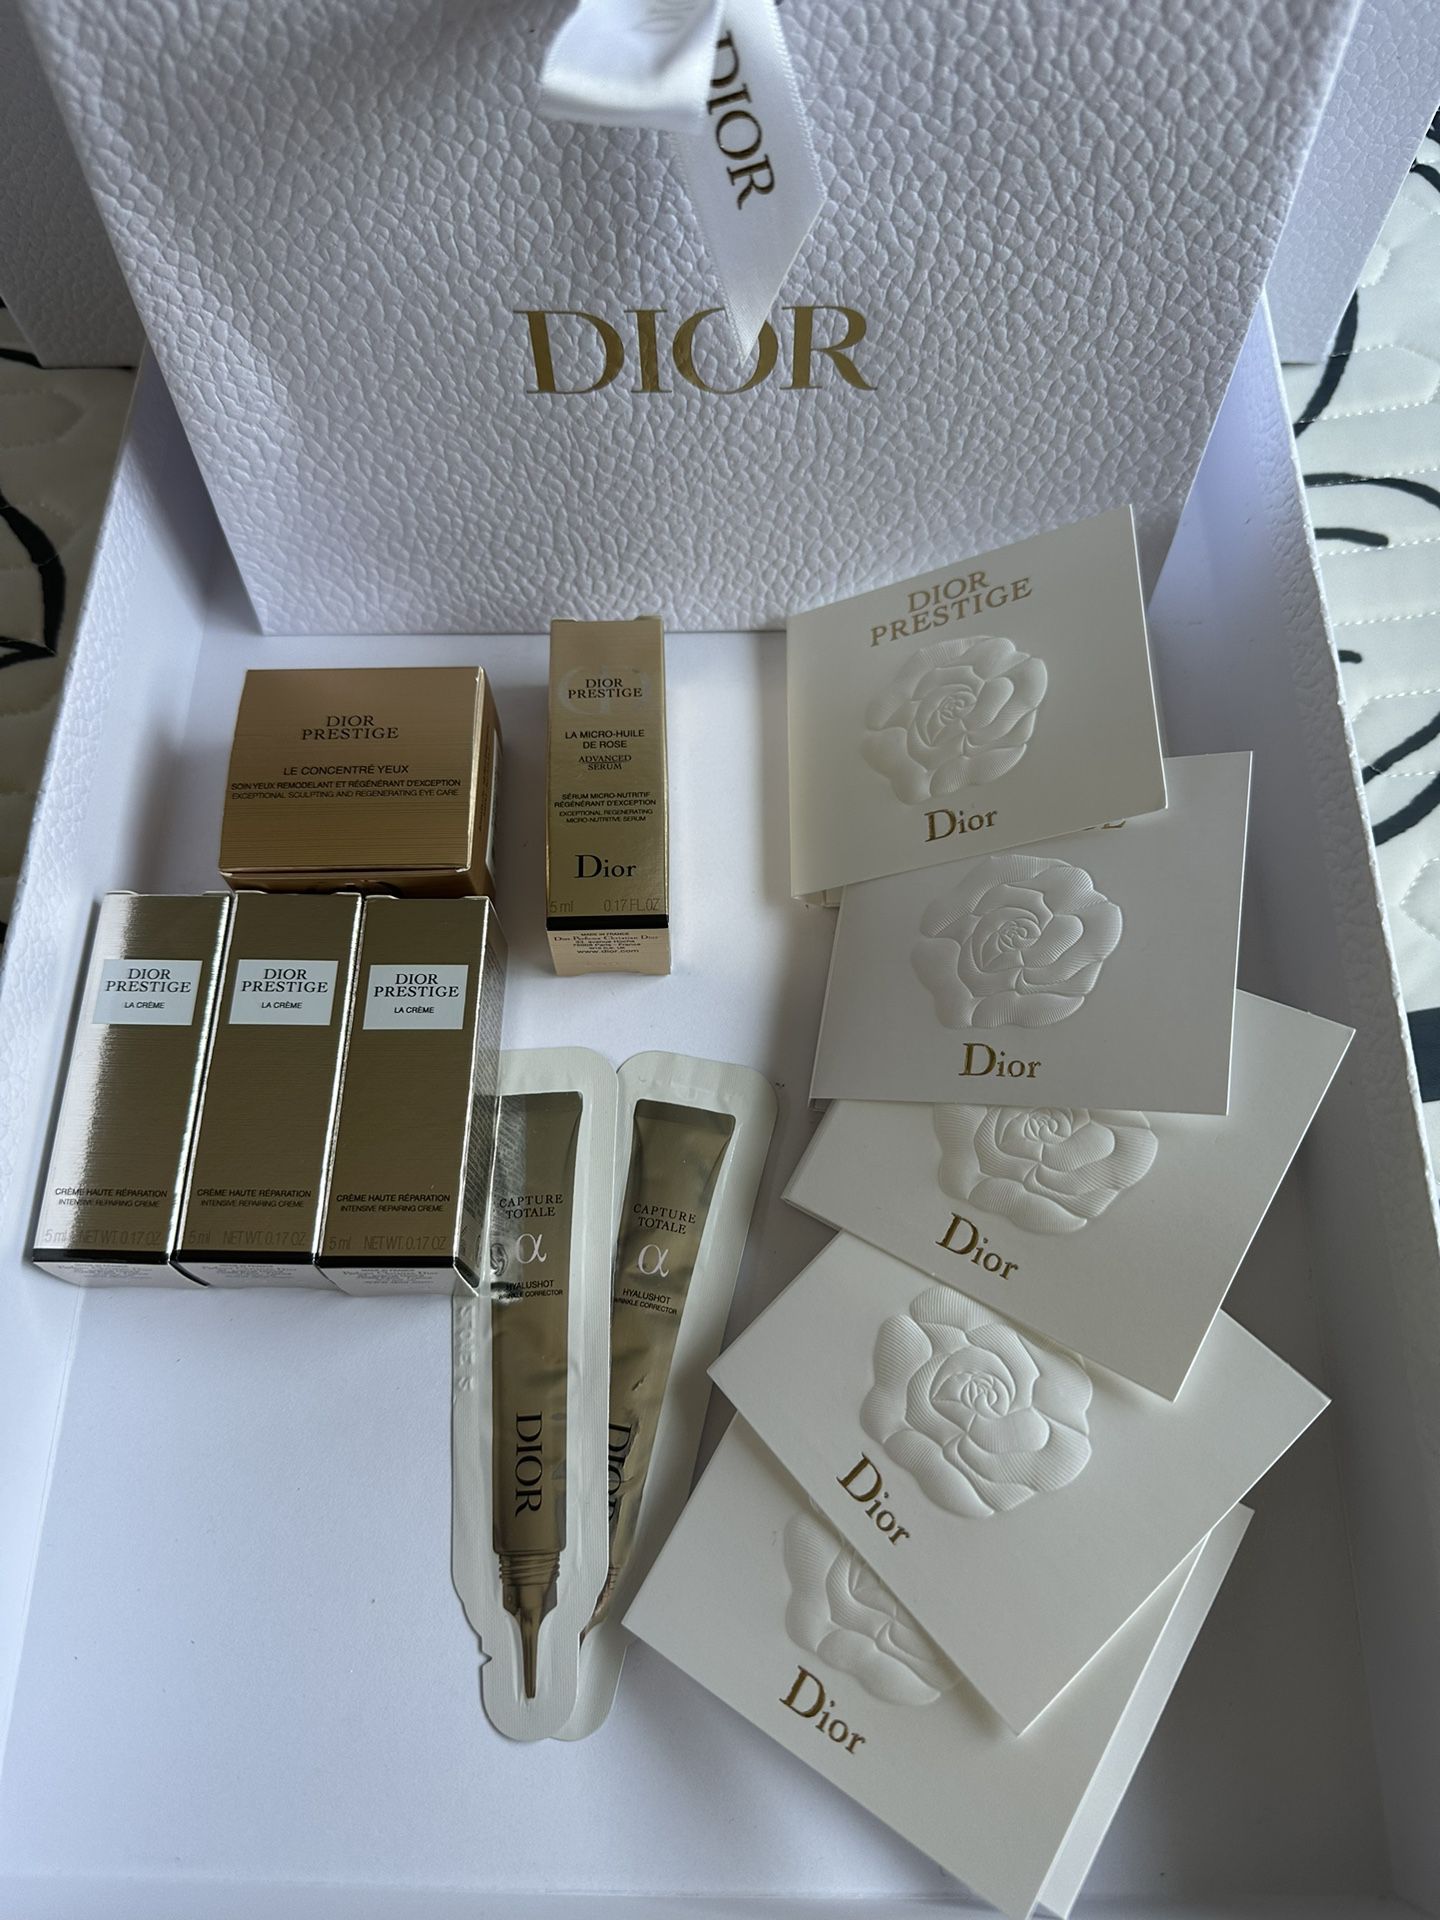 Dior Skincare Value Over $350